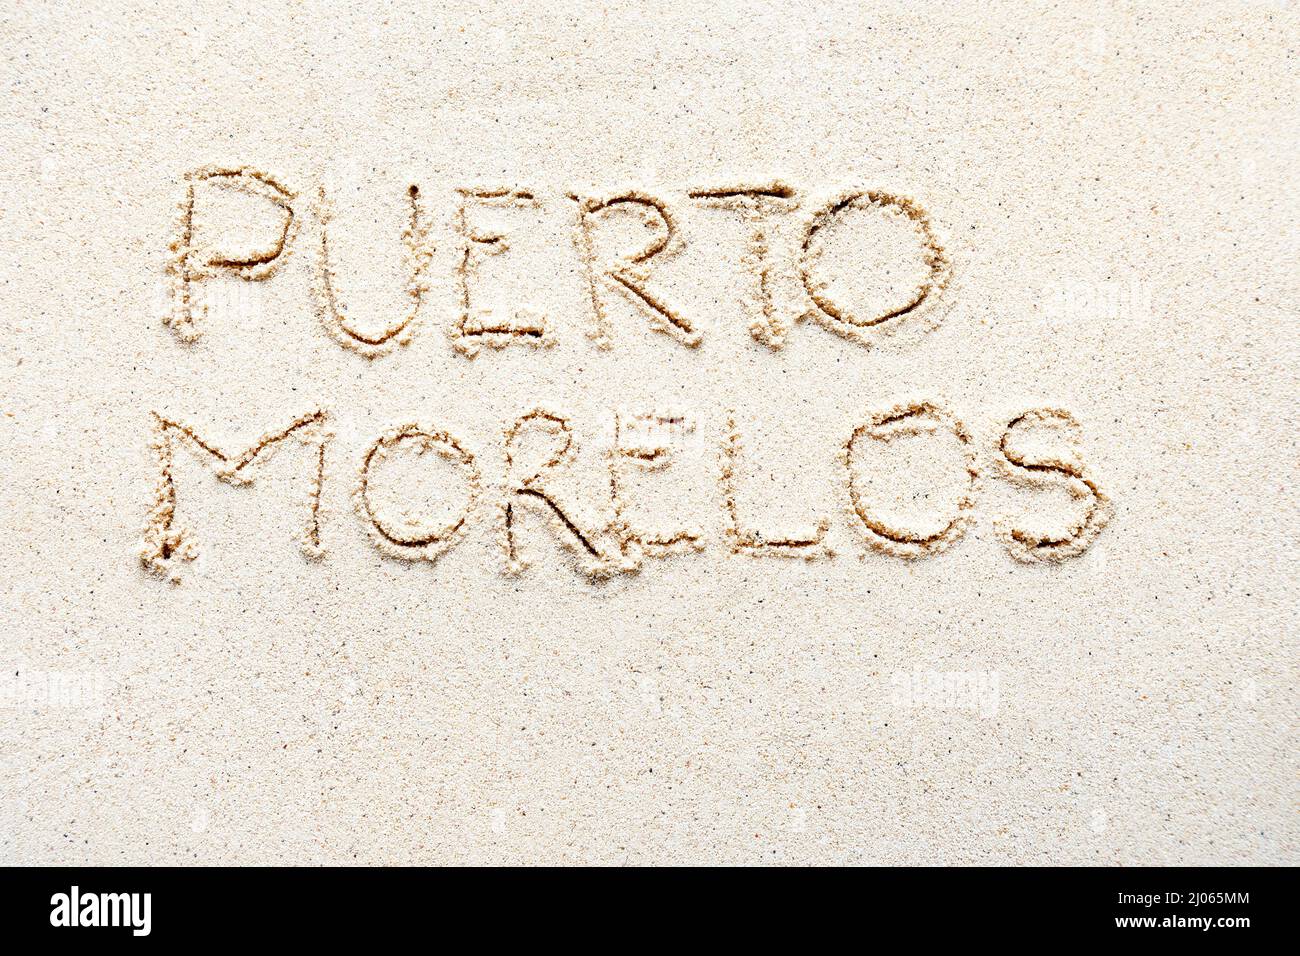 Handwriting words 'Puerto Morelos' on sand of beach Stock Photo